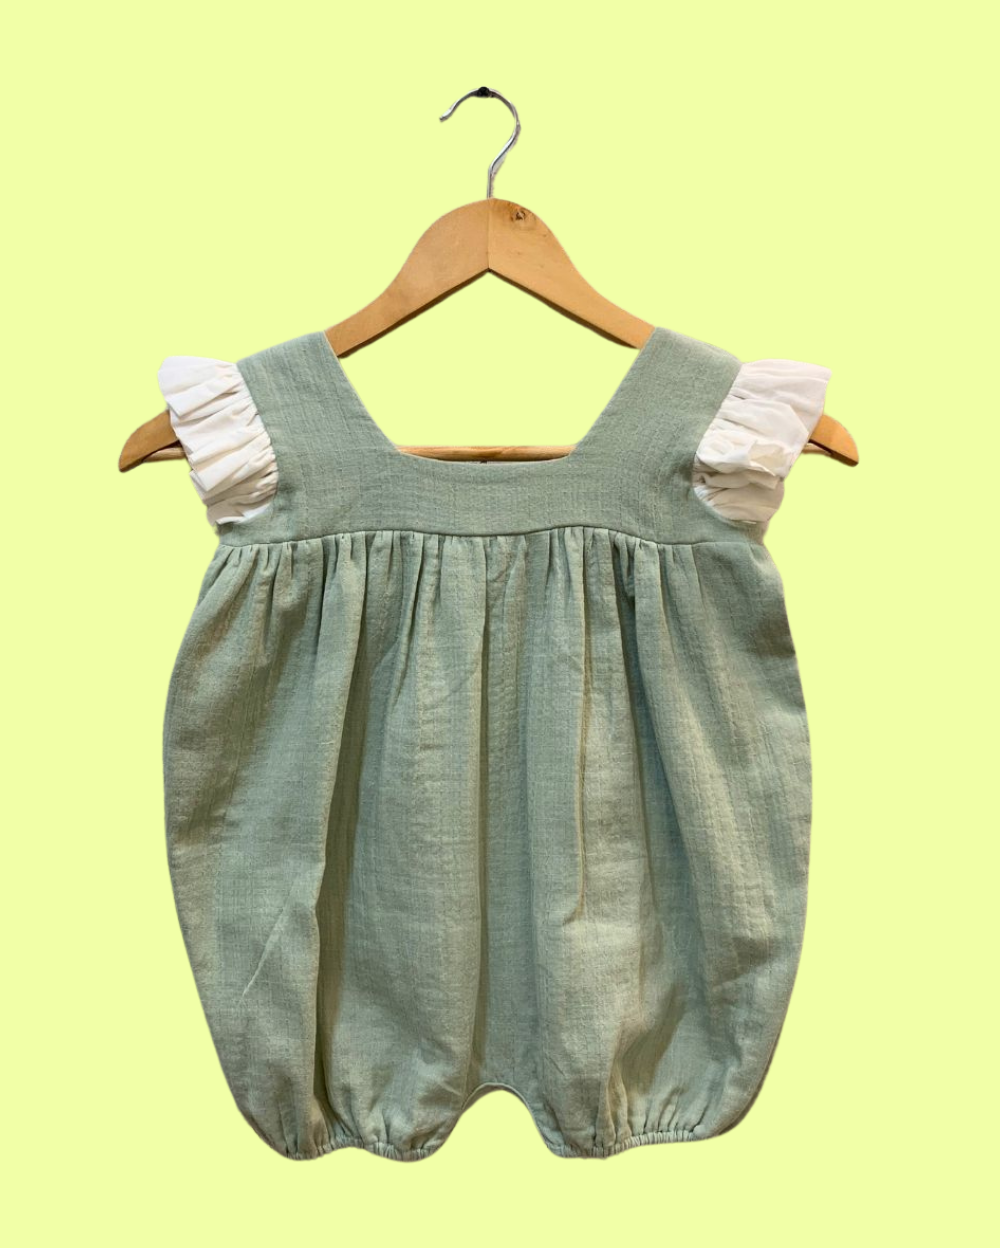 Adorable Baby Ensembles: Green Onesie, White Top & Blue Shorts, Abstract Print Set